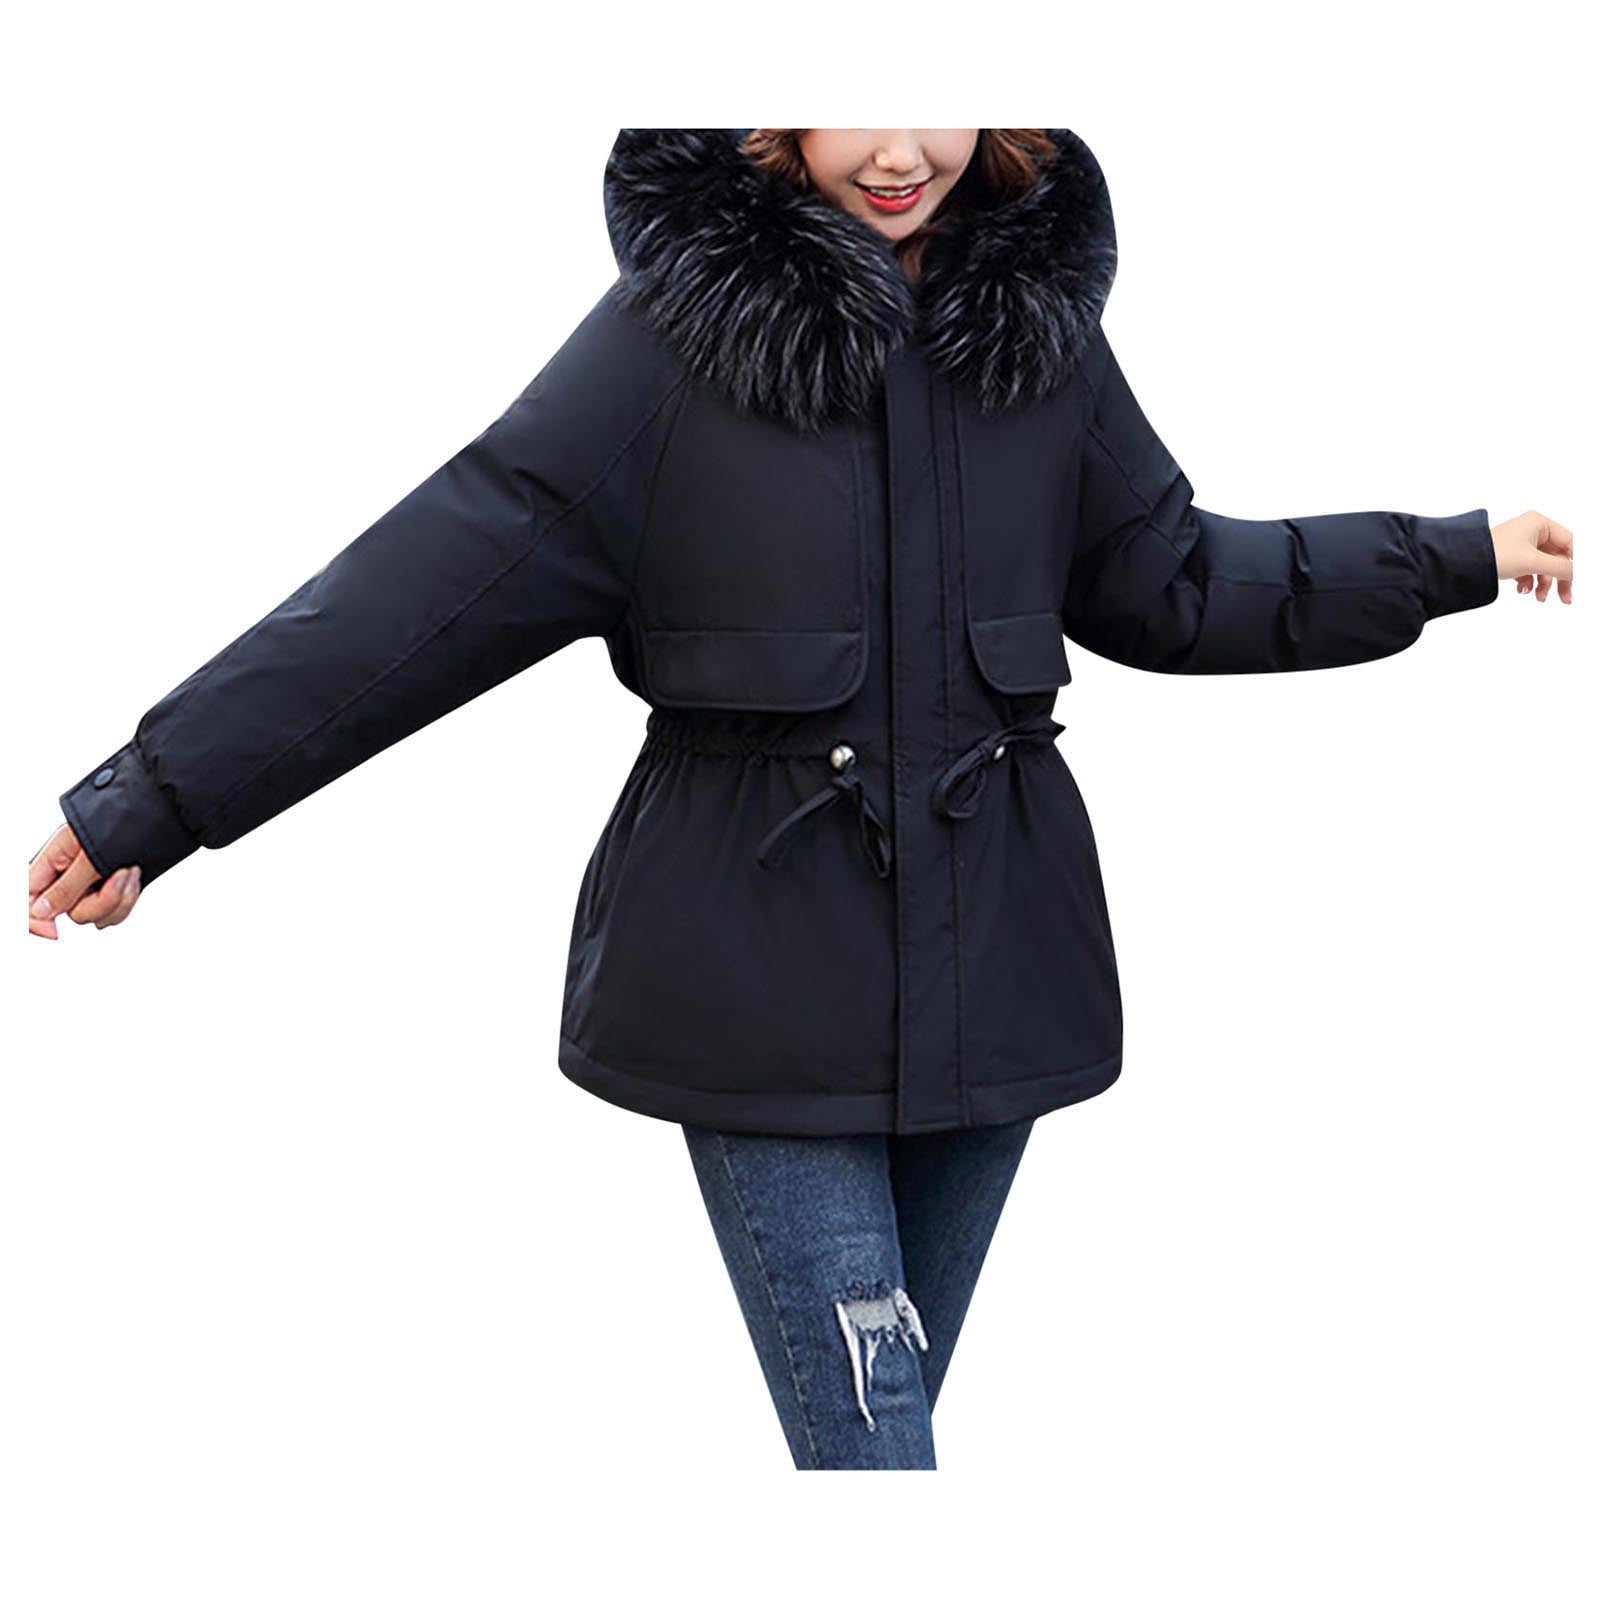 TAIAOJING Women Warm Jacket Coat Elegant Coat Jacket Outerwear Long Soft Warm Cotton-padded Jackets Hooded Pocket Long Sleeve Jacket Walmart.com